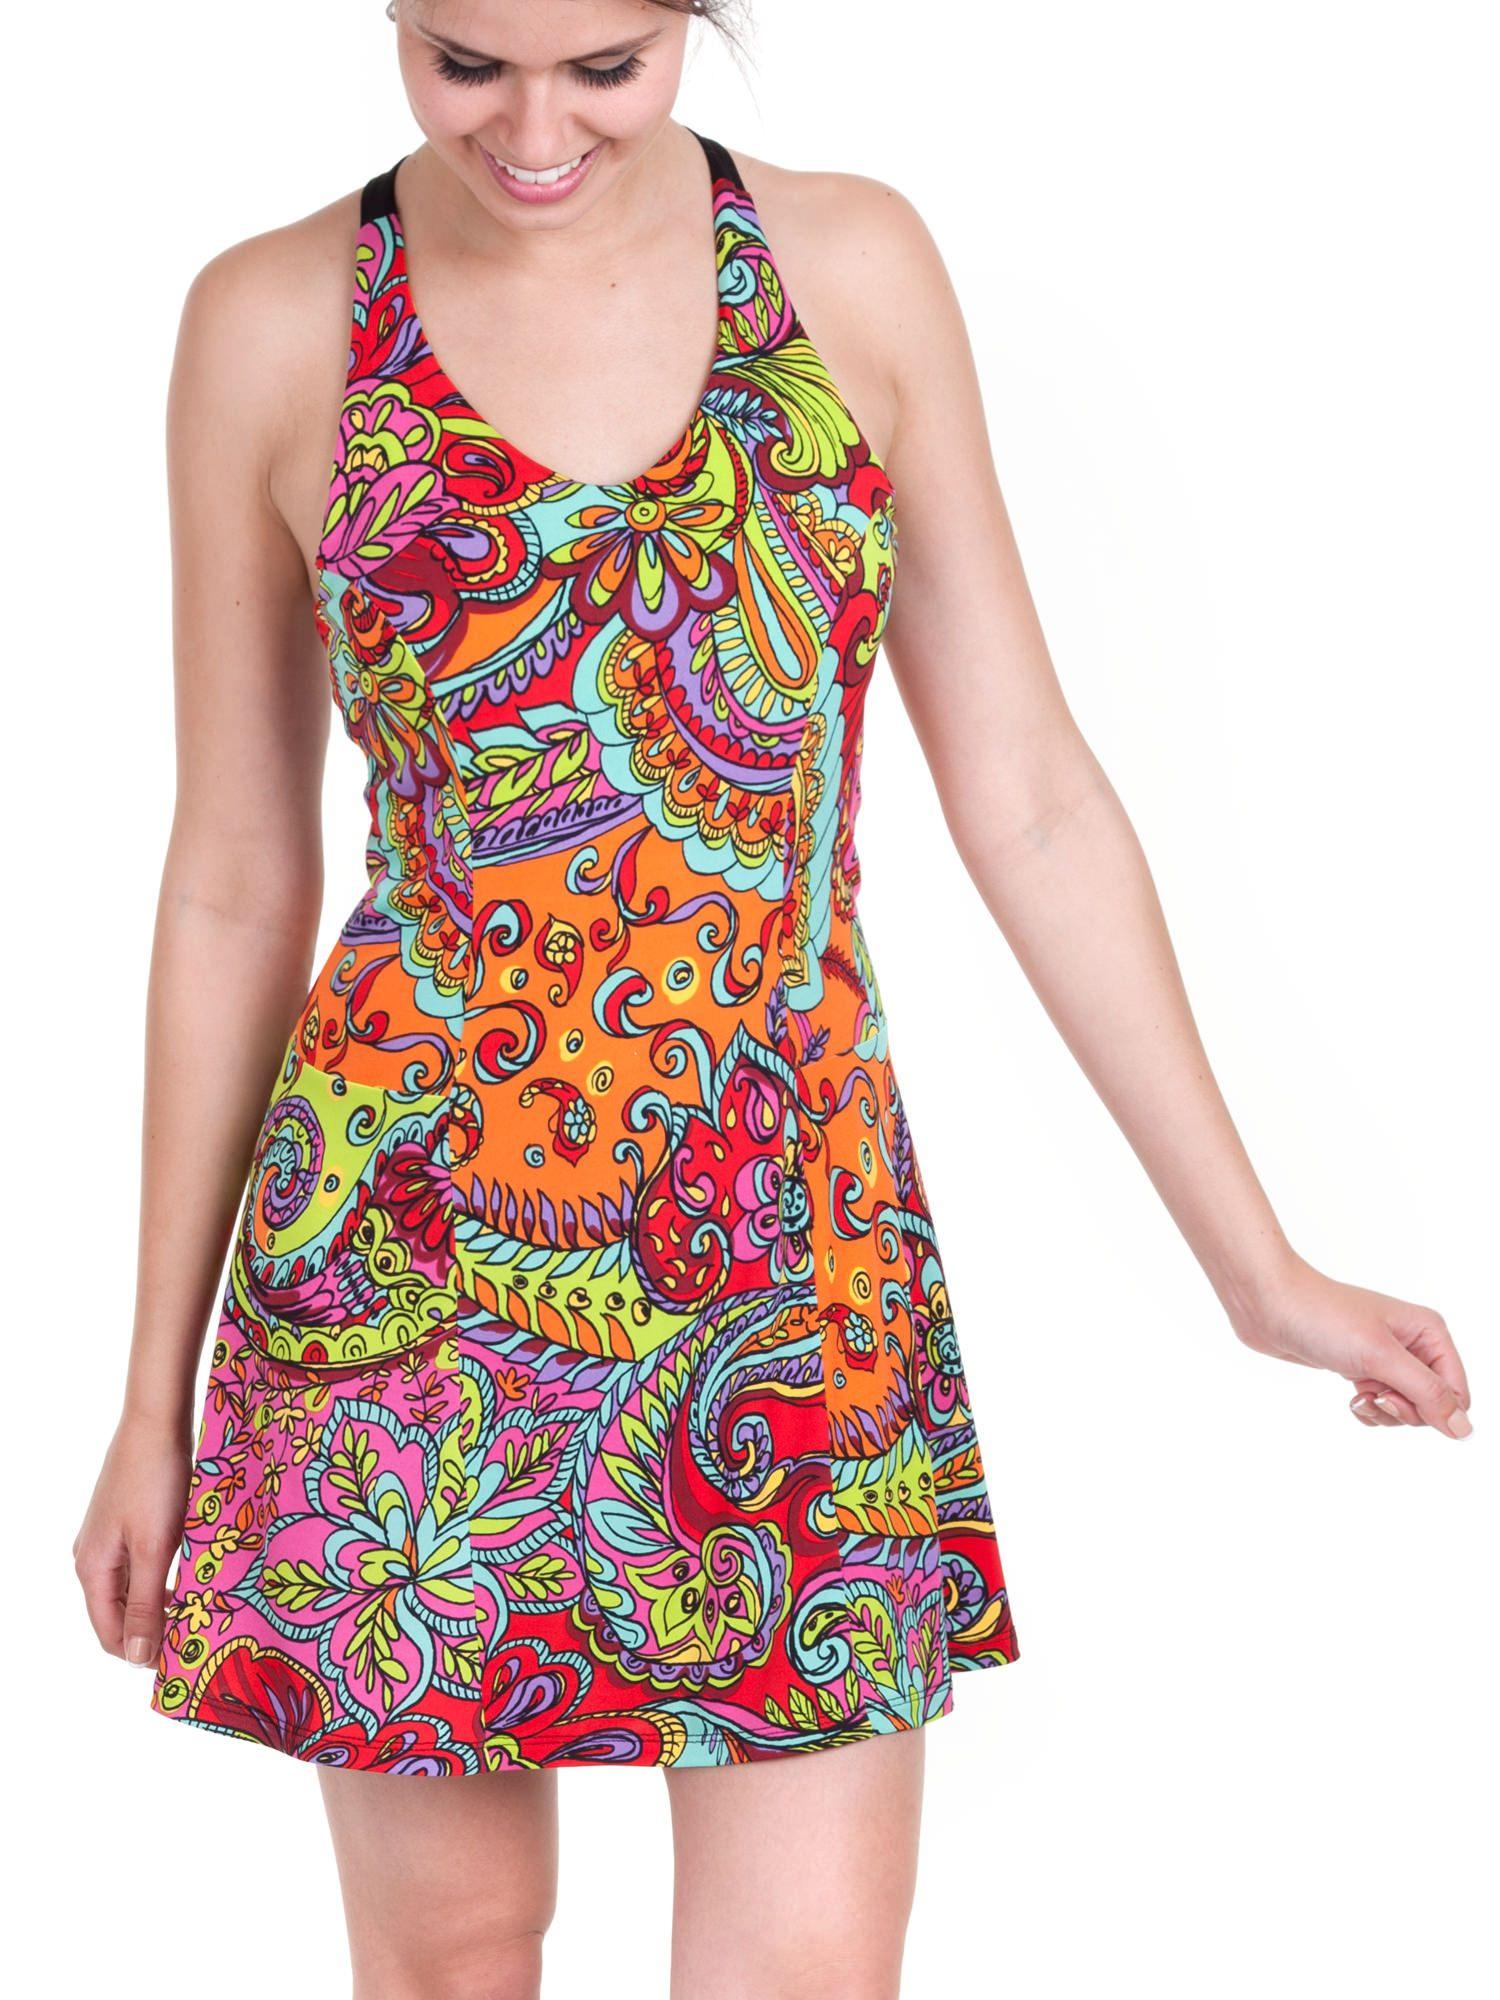 Jalie Racerback Tank Top & Tennis Dress w/Built in Bra Sewing Pattern 3463  Anne-Marie - 27 Sizes for Women and Girls